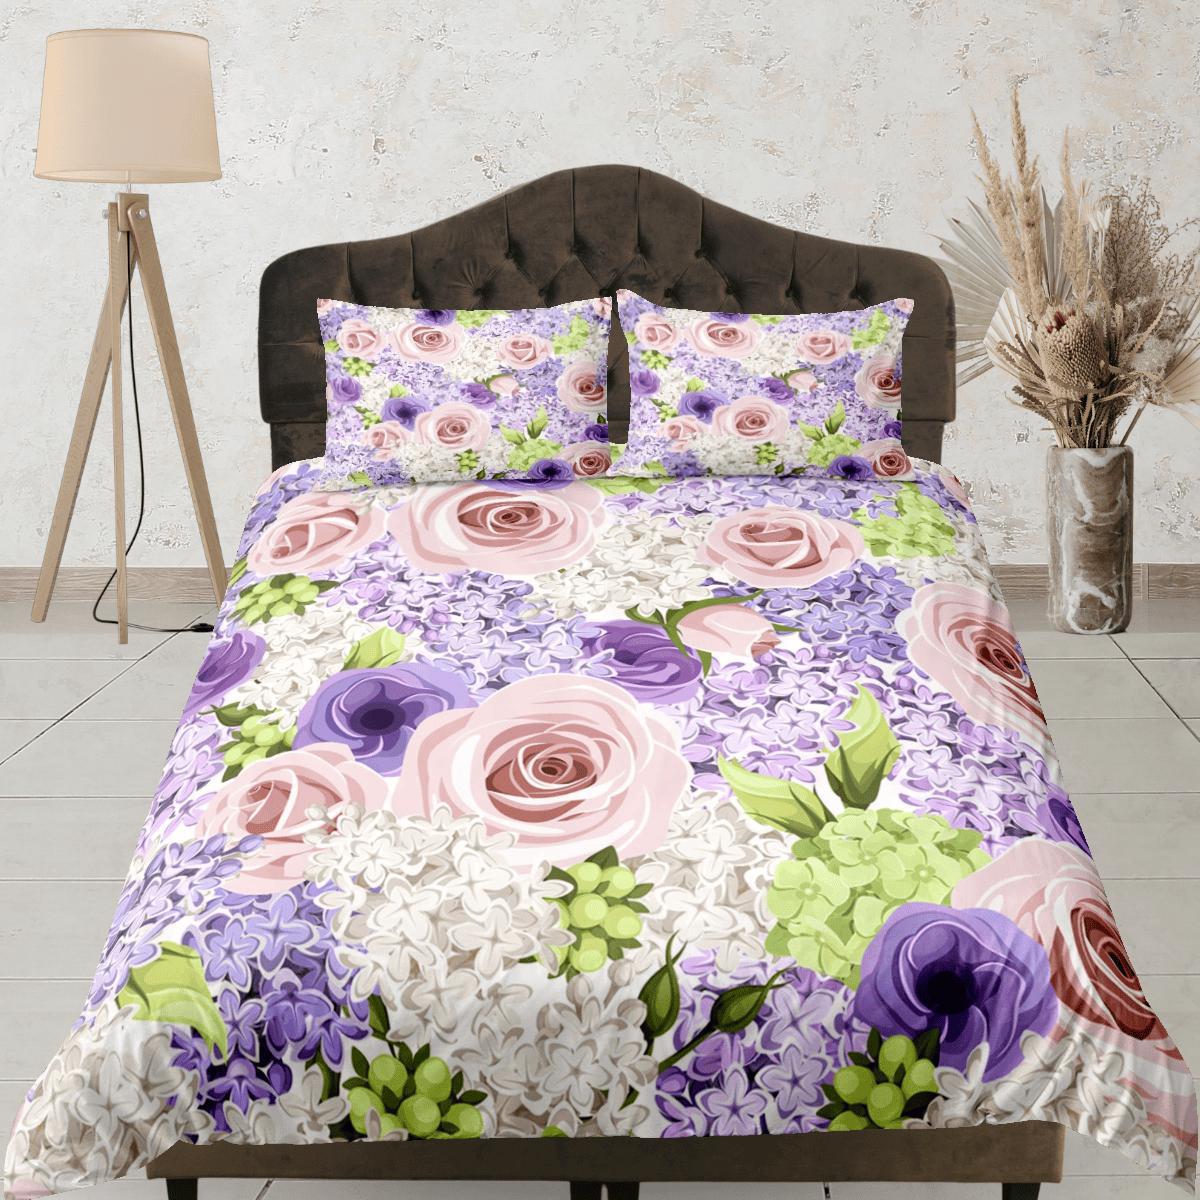 daintyduvet Purple & Pink Roses Duvet Cover Set Colorful Bedspread, Floral Dorm Bedding Pillowcase, King Duvet Full Queen Duvet Comforter Cover Twin